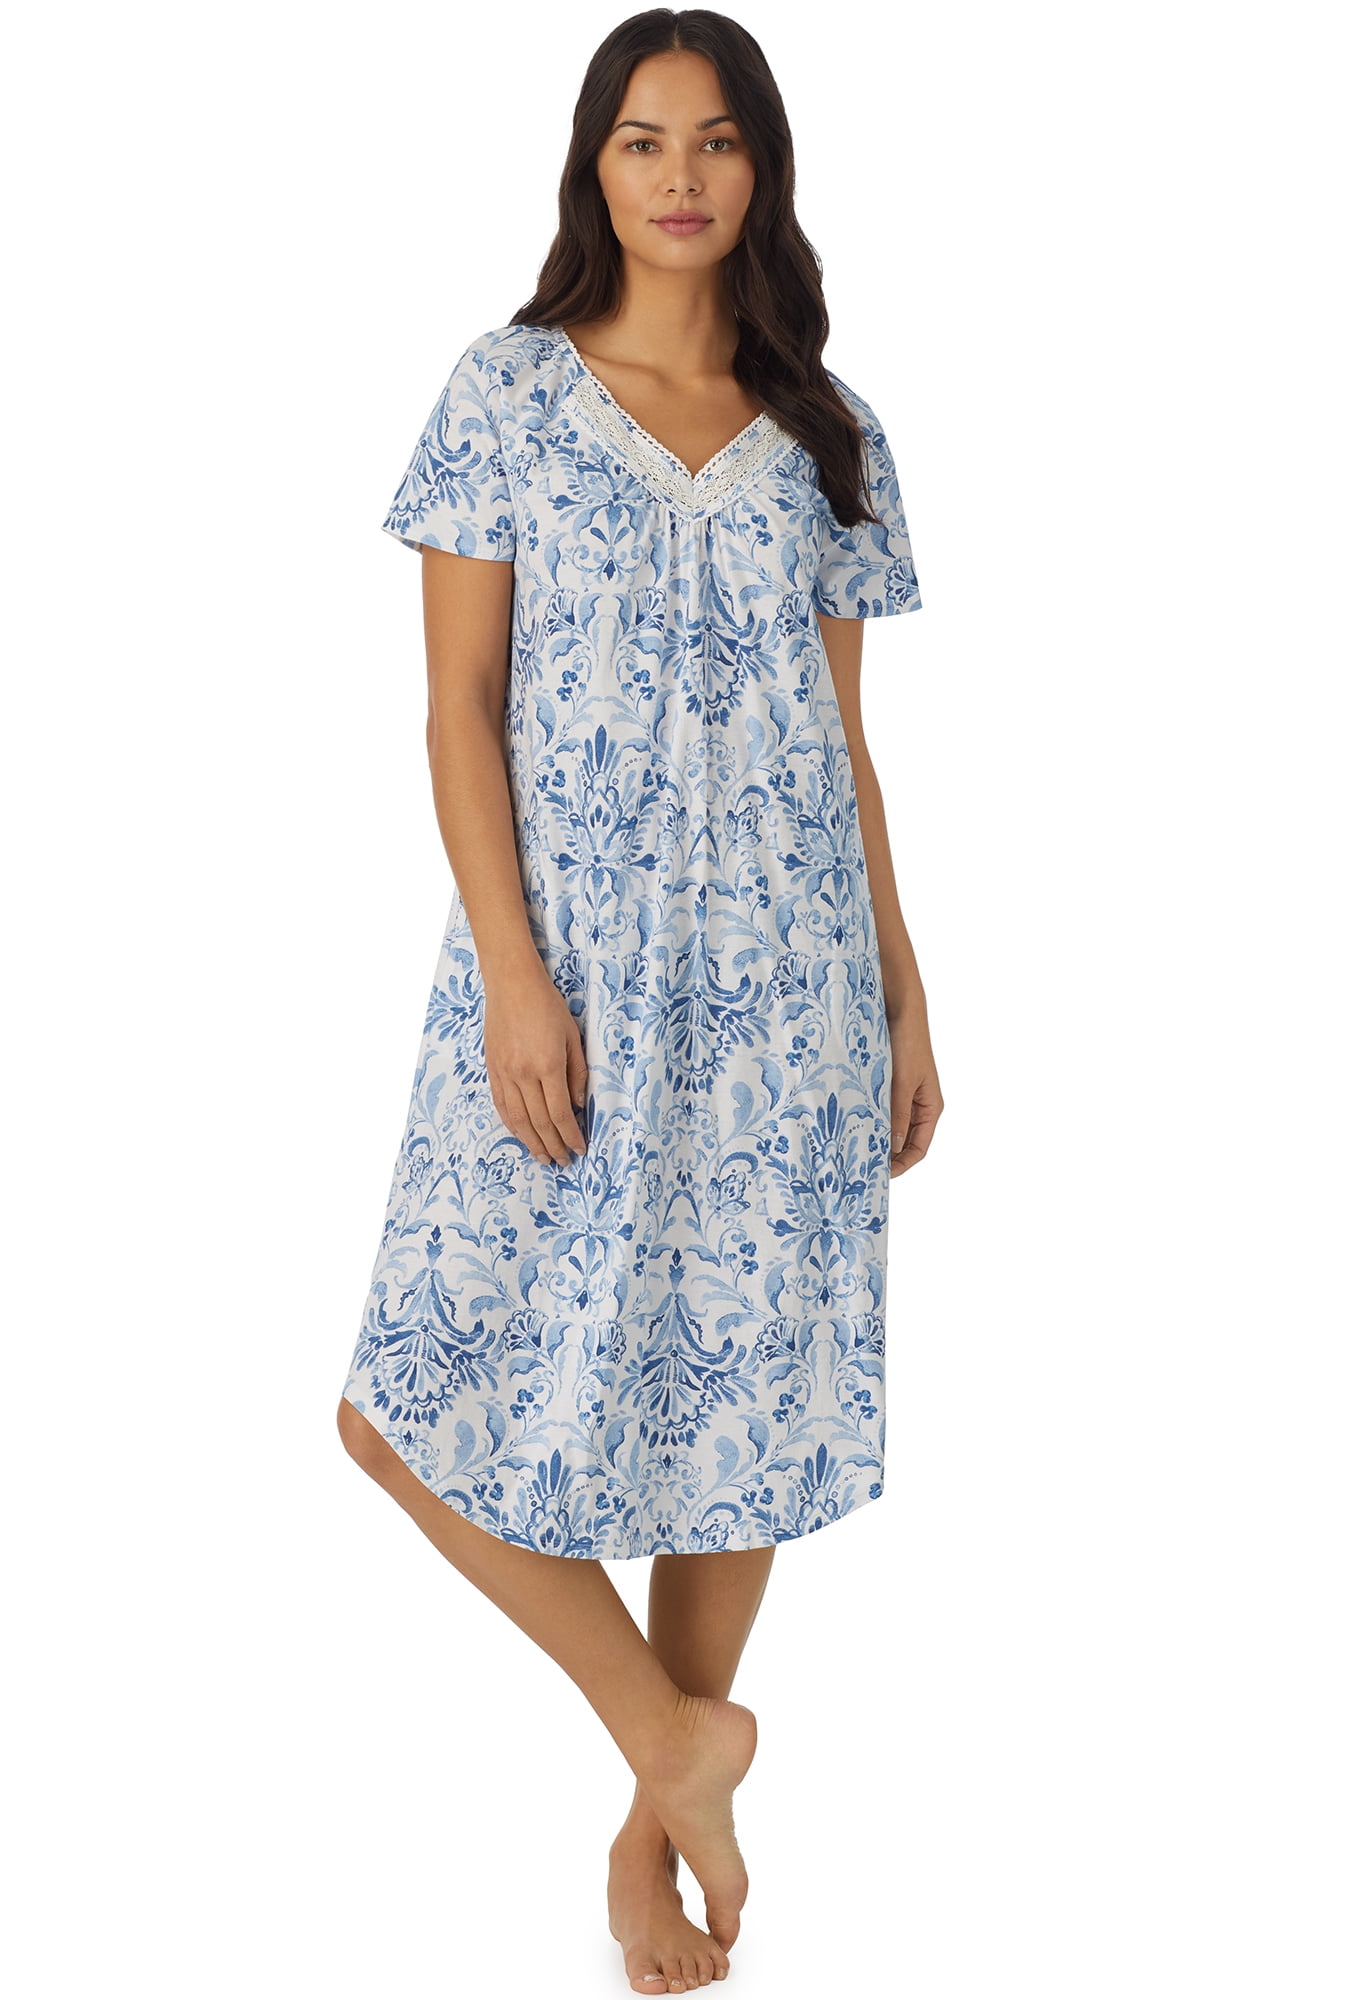 Aria Women's Cap Sleeve Nightgown - Walmart.com